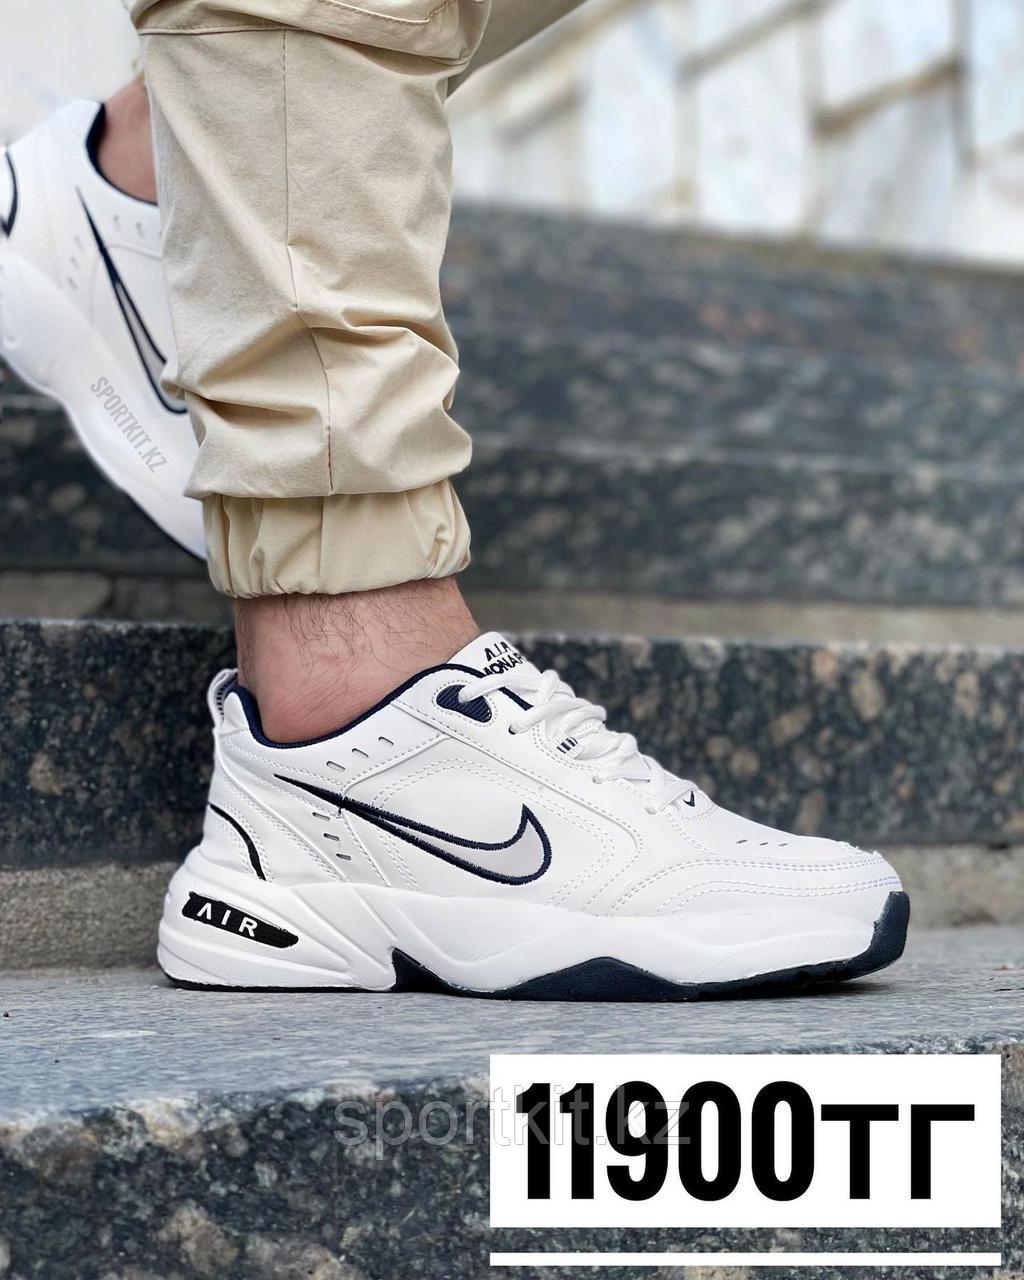 Крос Nike Monarch бел чер 2201-1